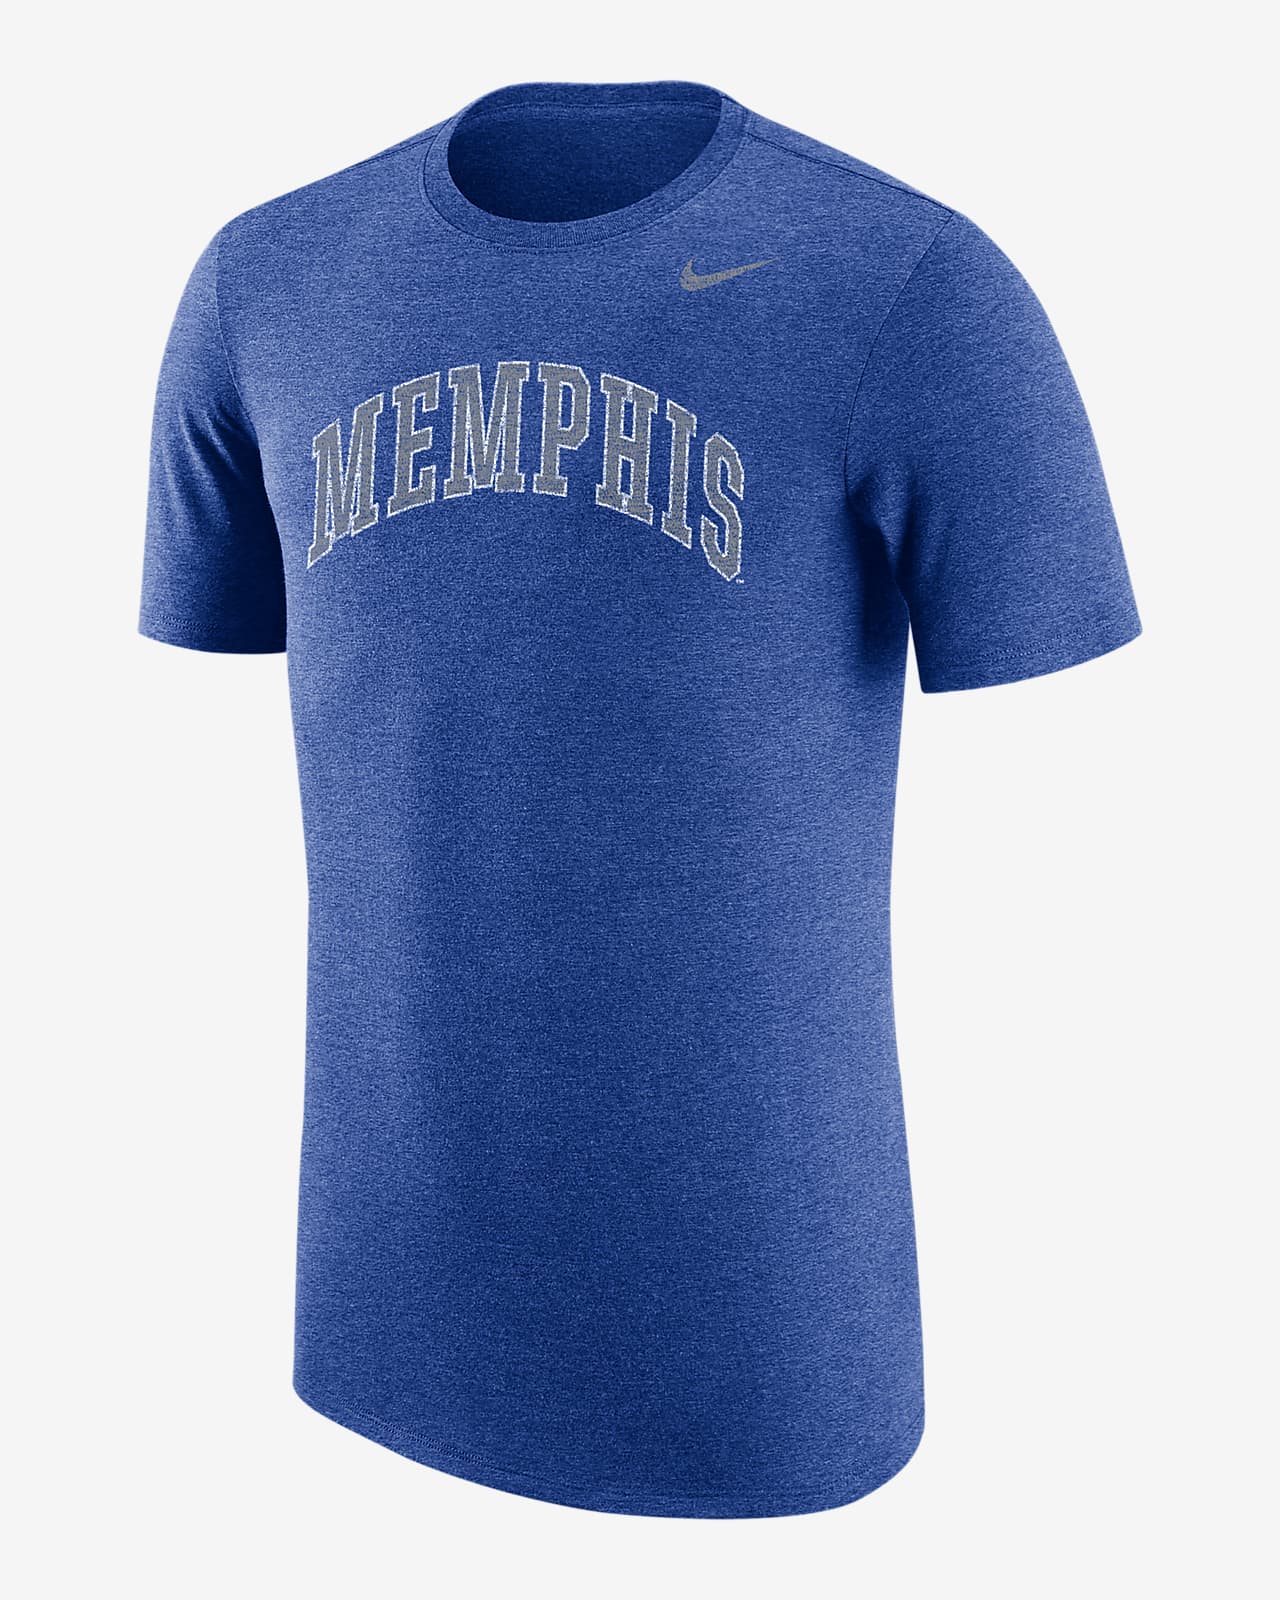 Nike College (Memphis) Men's T-Shirt